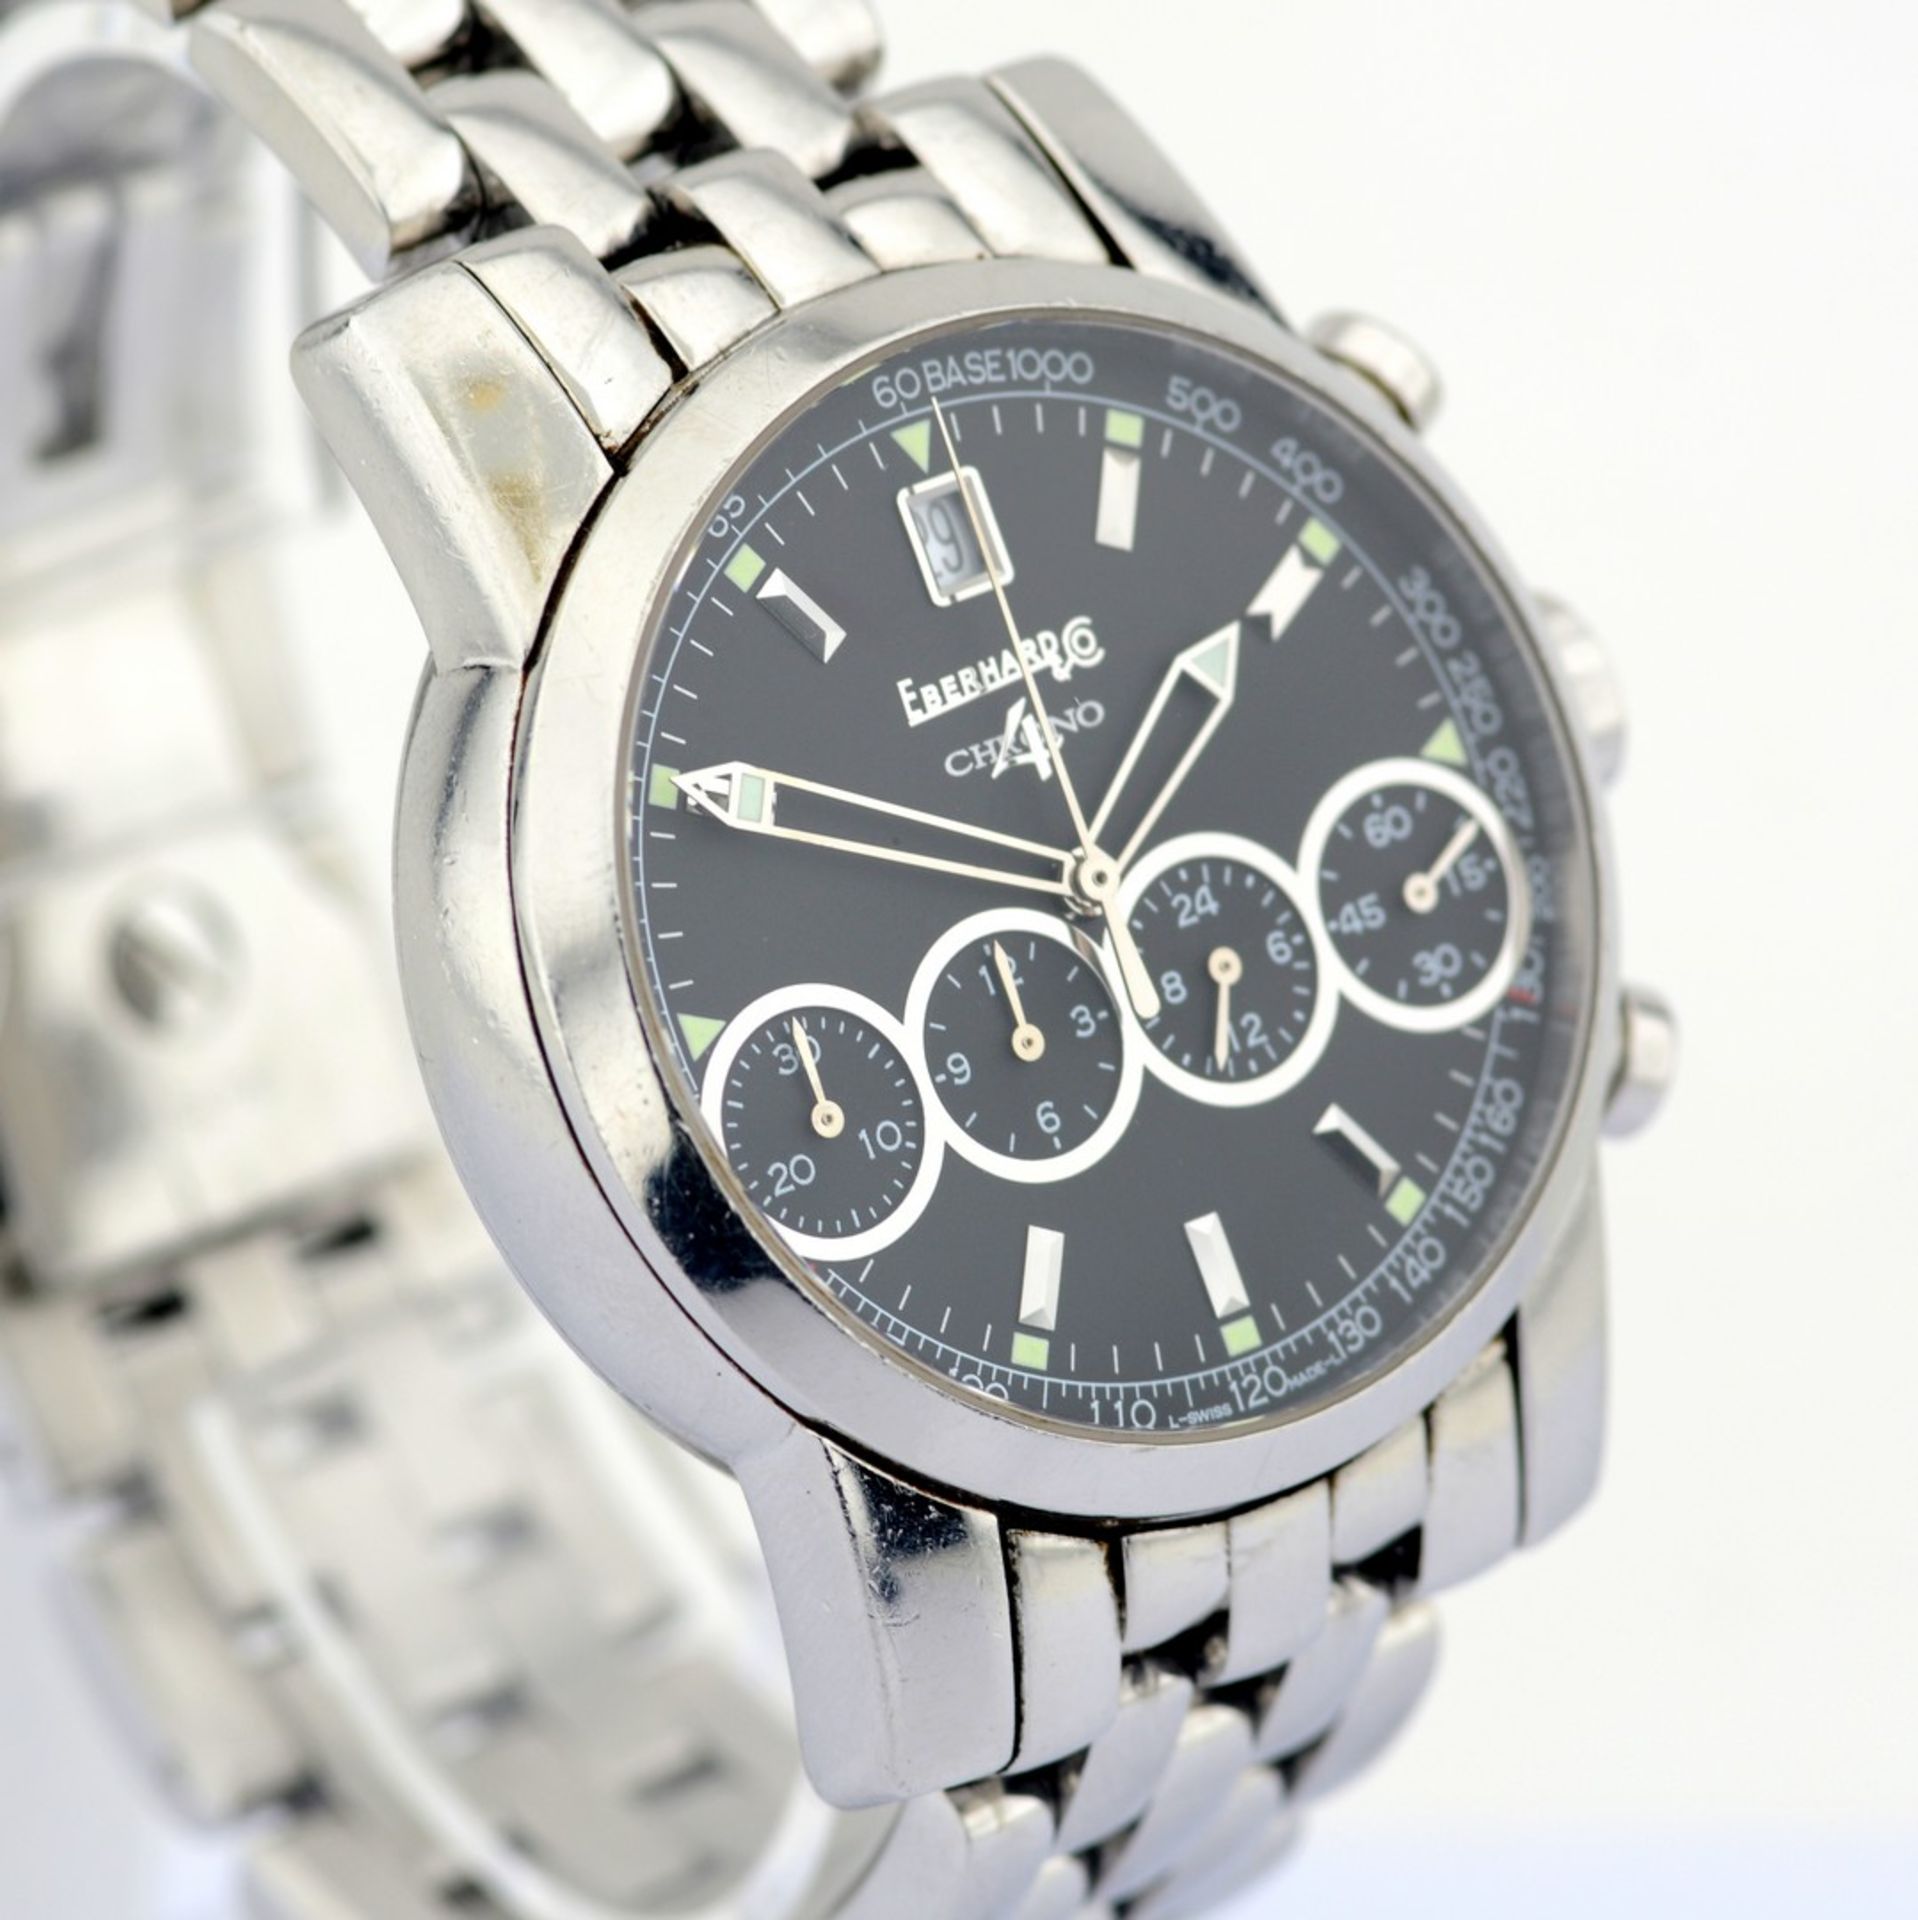 Eberhard & Co. / Chrono 4 Chronograph Automatic -Date - Gentlemen's Steel Wristwatch - Image 4 of 8